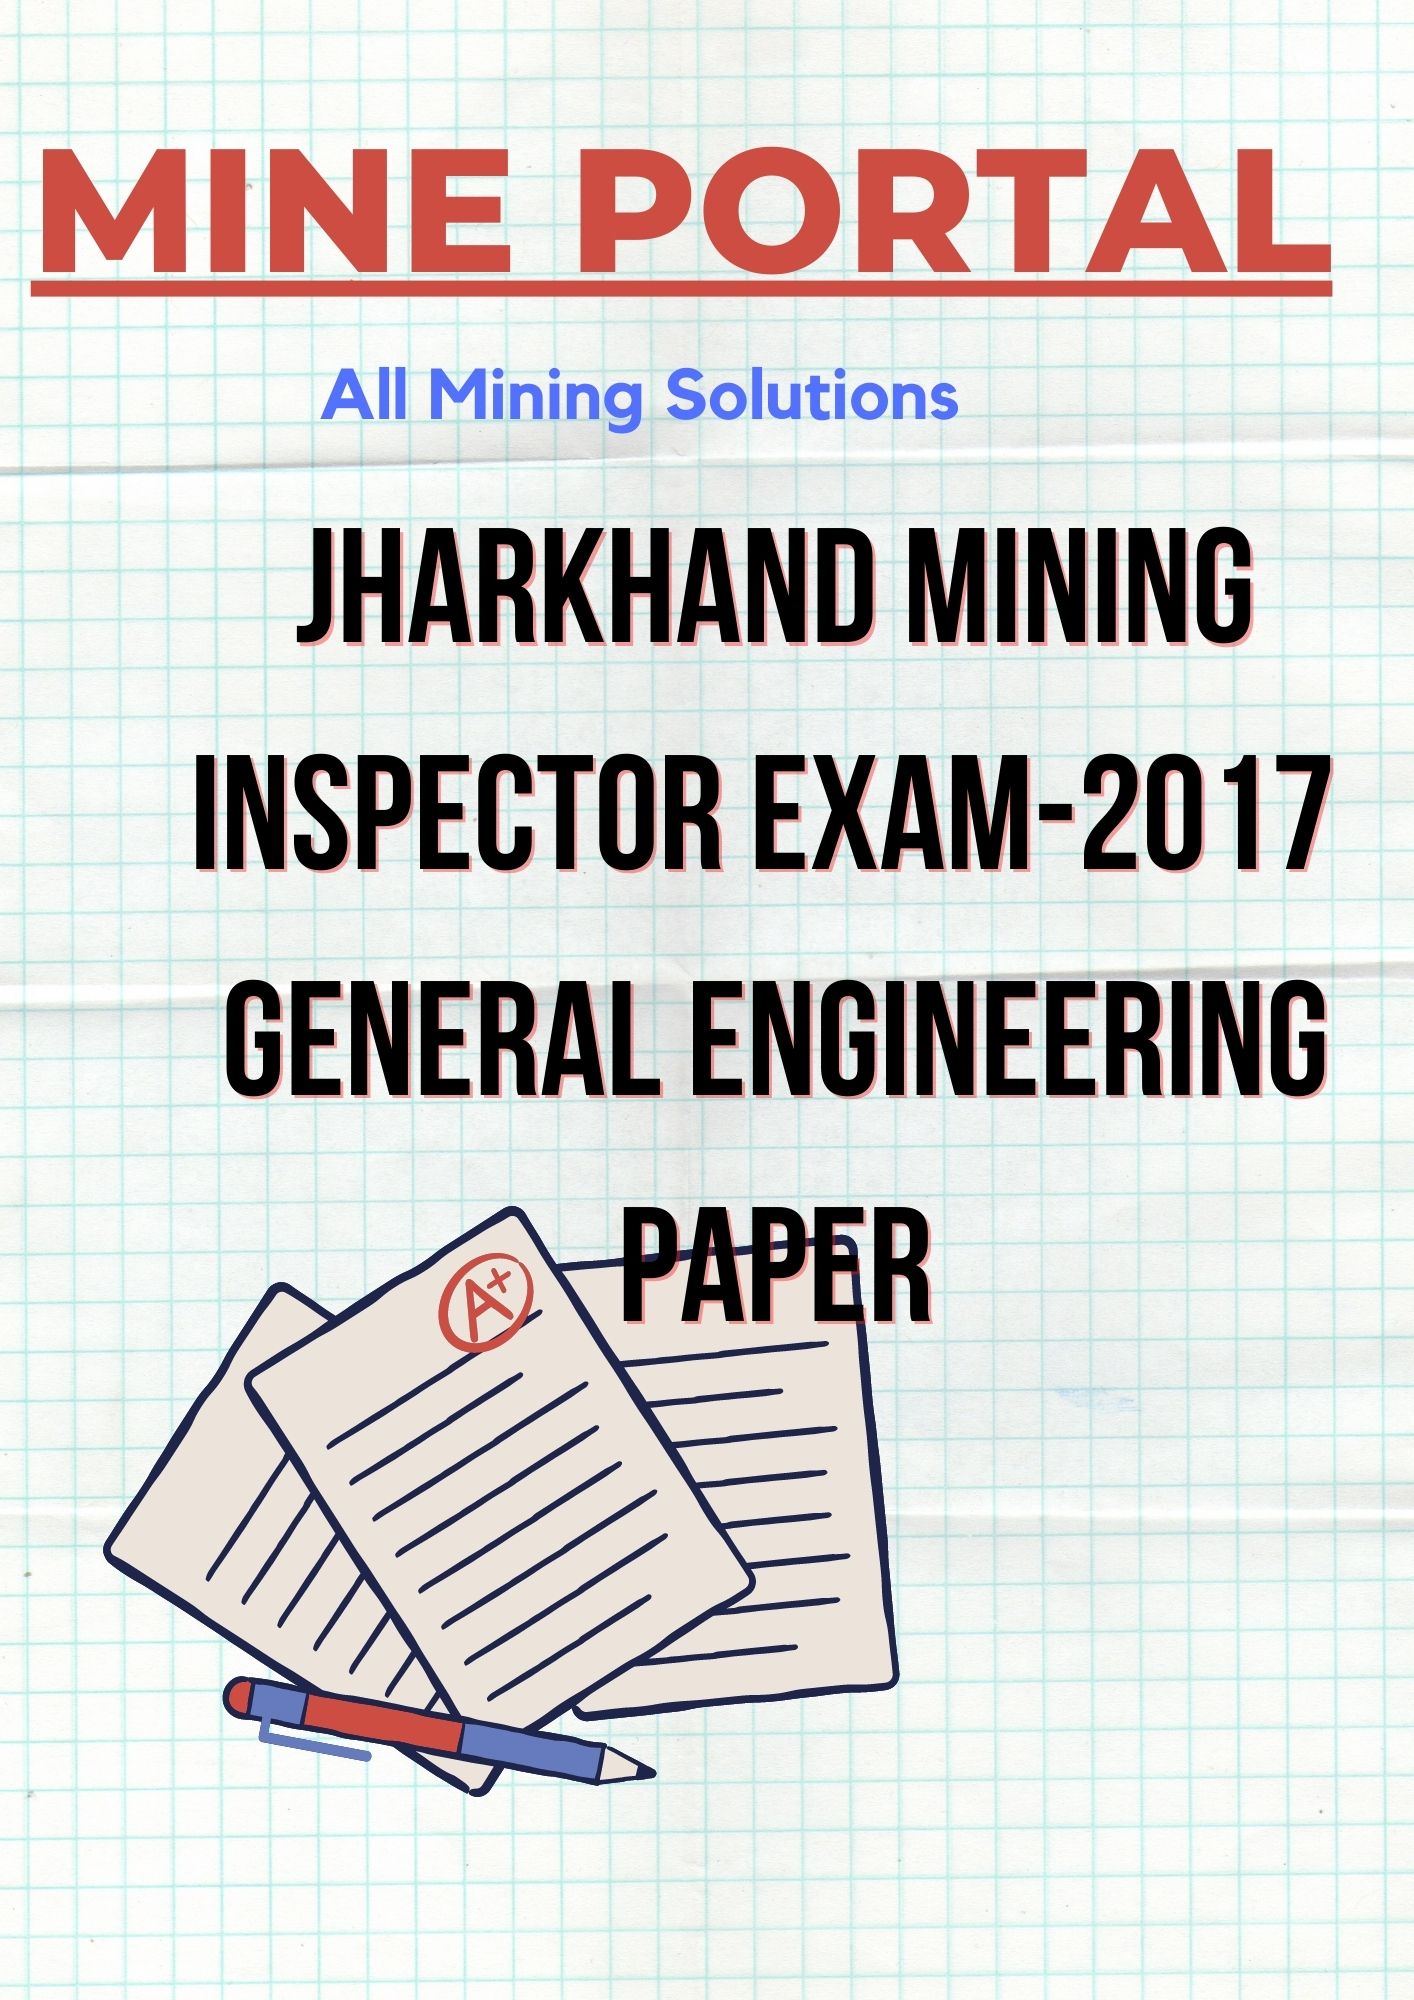 JH MINING INSPECTOR EXAM-2017 GENERAL ENGINEERING PAPER